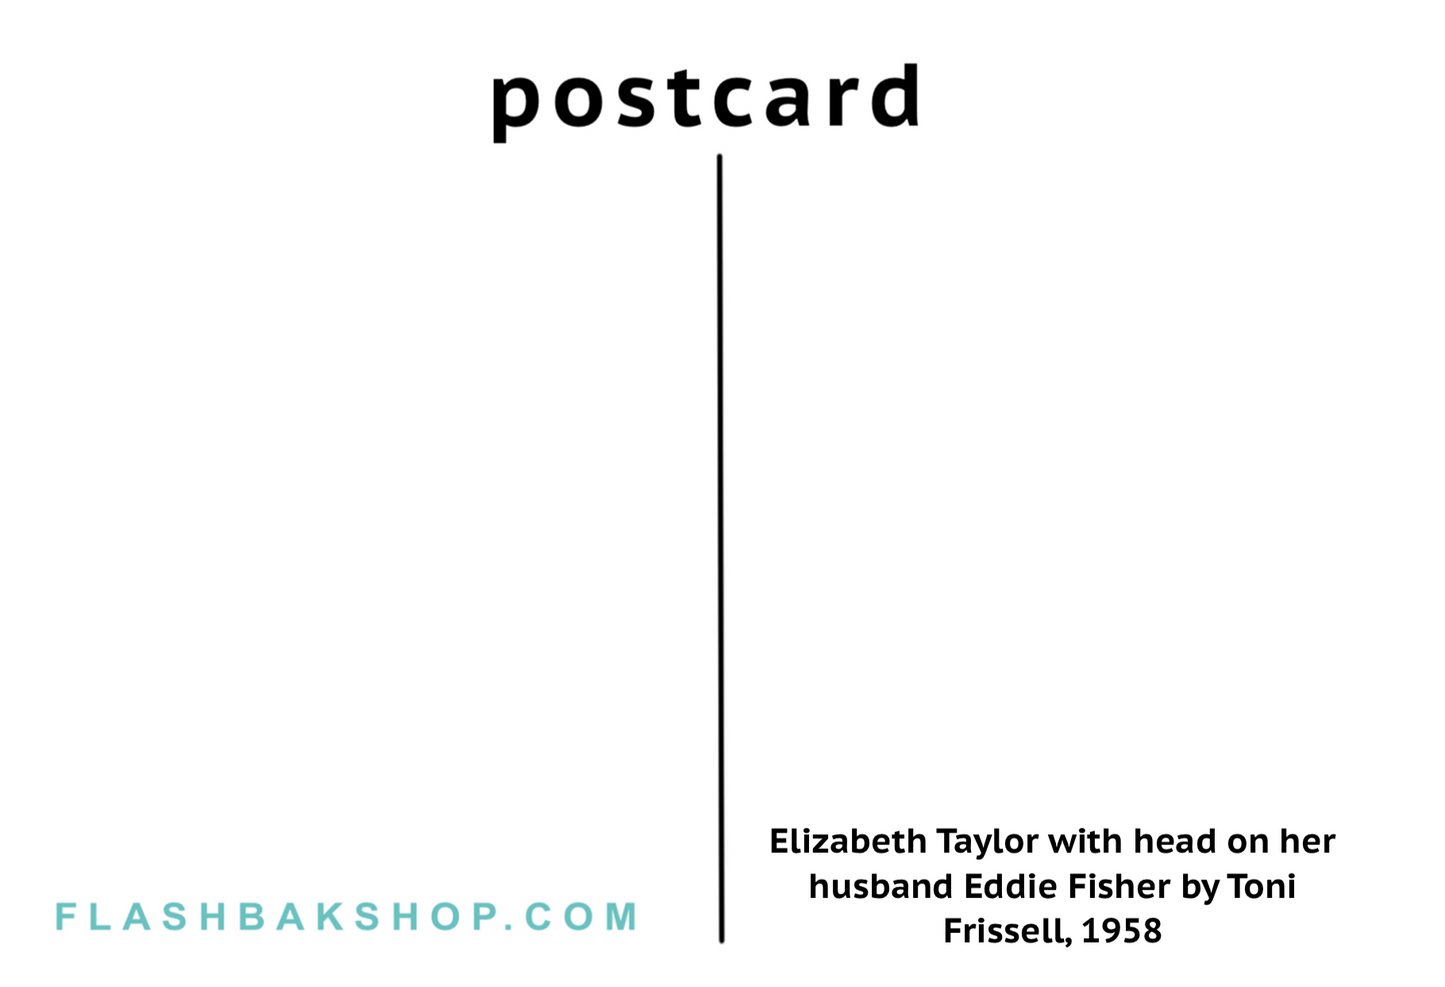 Elizabeth Taylor with head on her husband Eddie Fisher by Toni Frissell, 1958 - Postcard